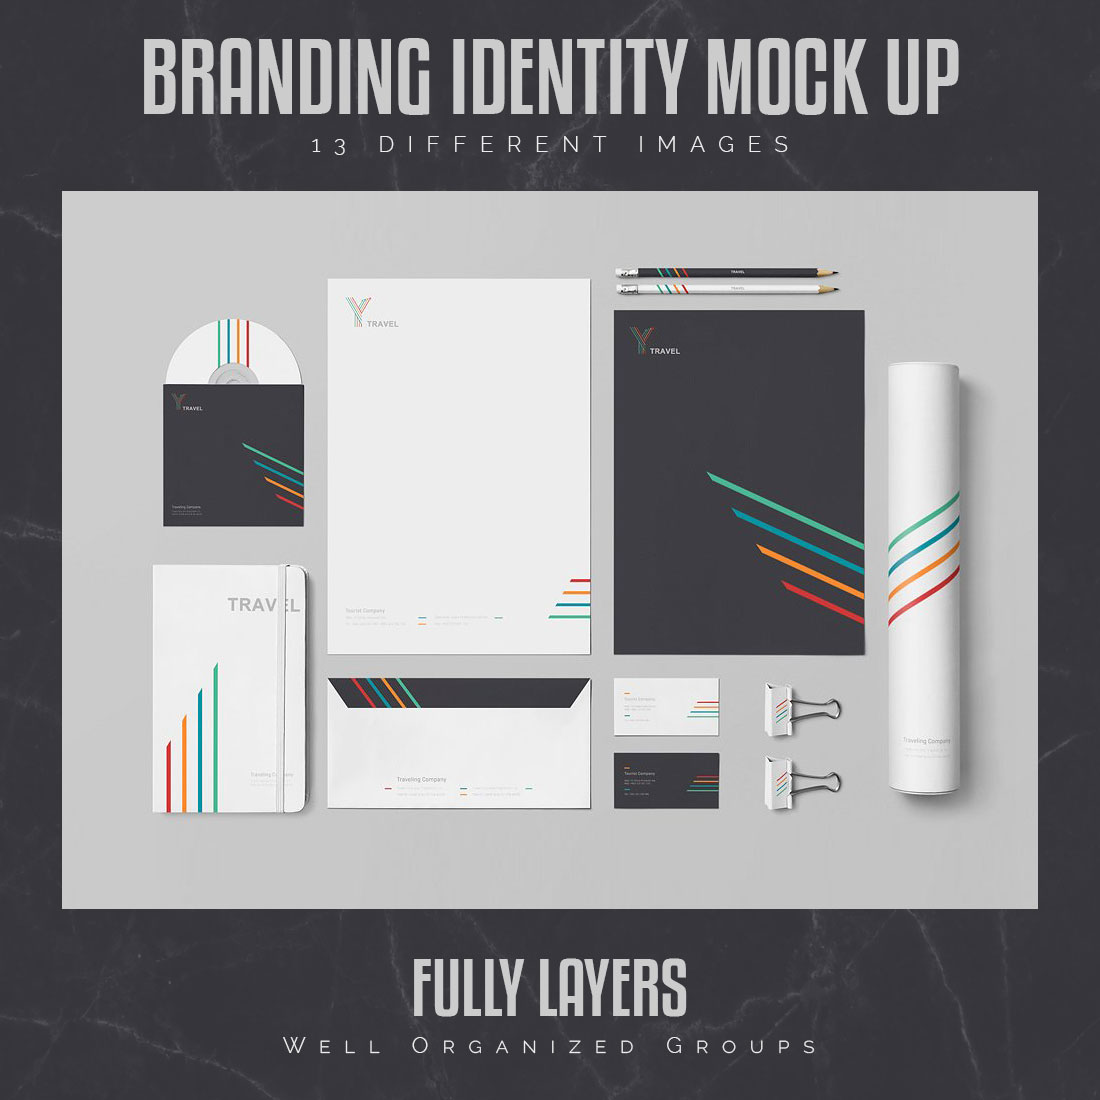 Branding Identity Mock Up cover image.